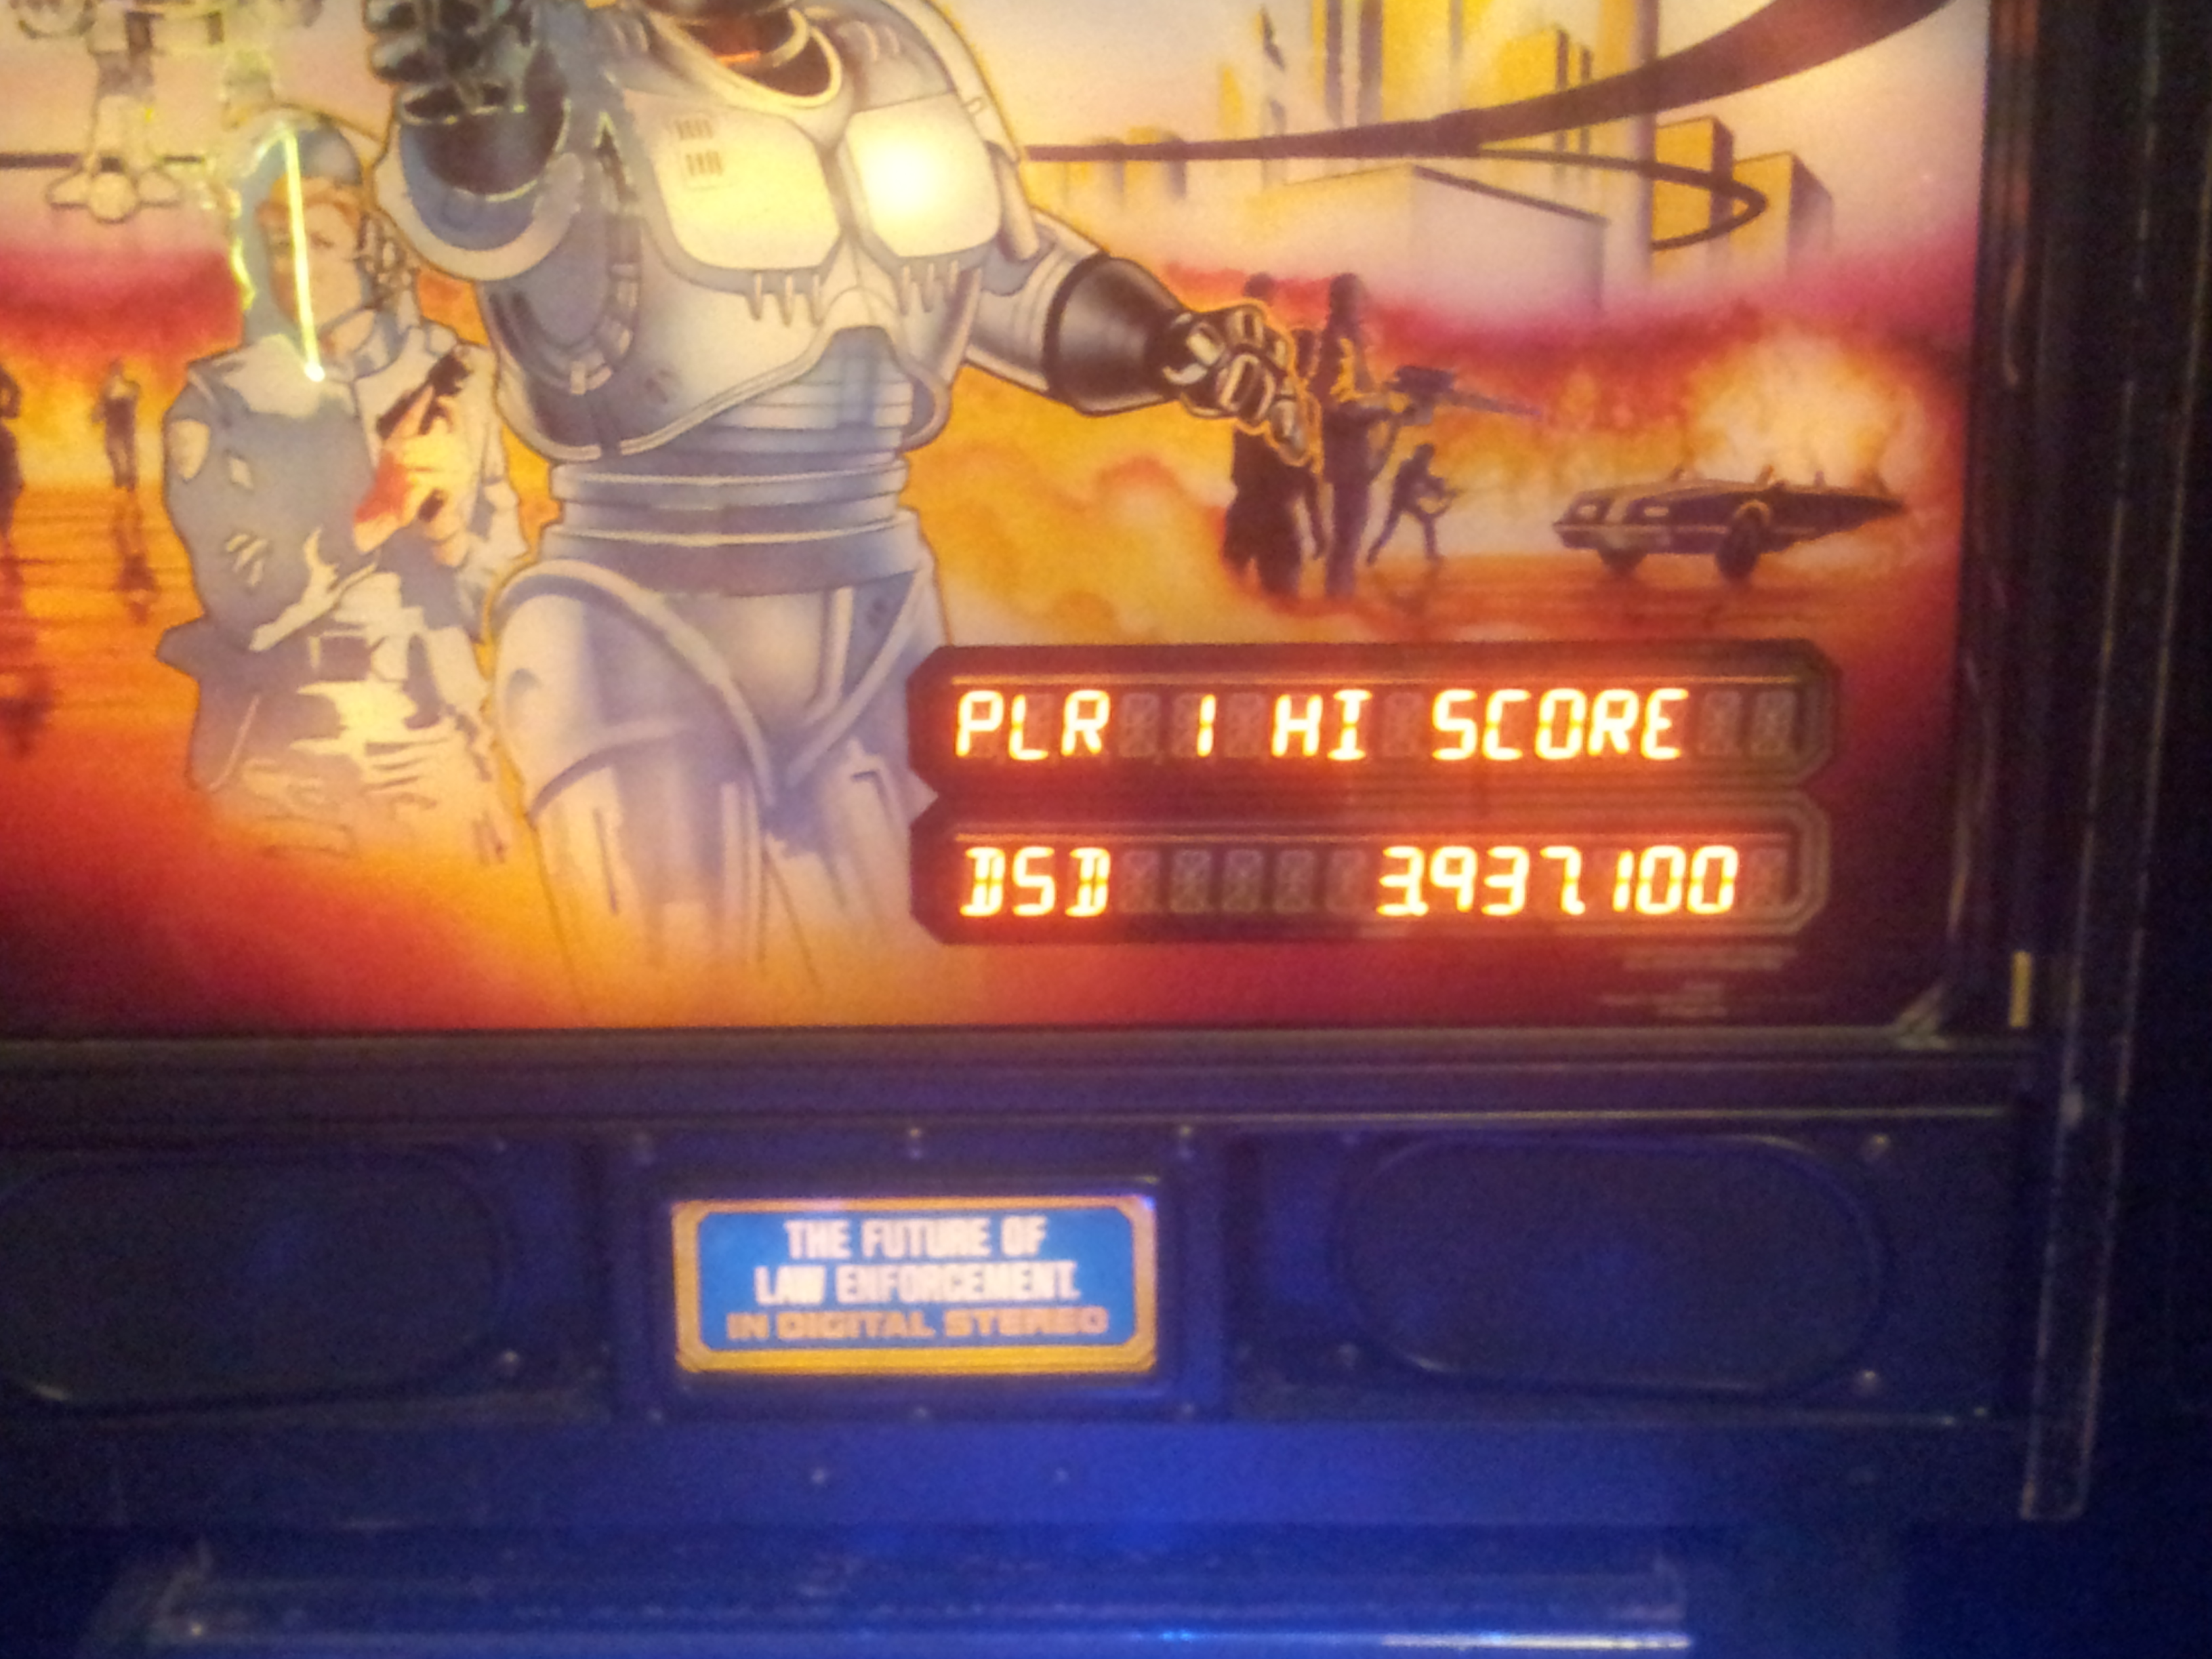 RoboCop 3,937,100 points